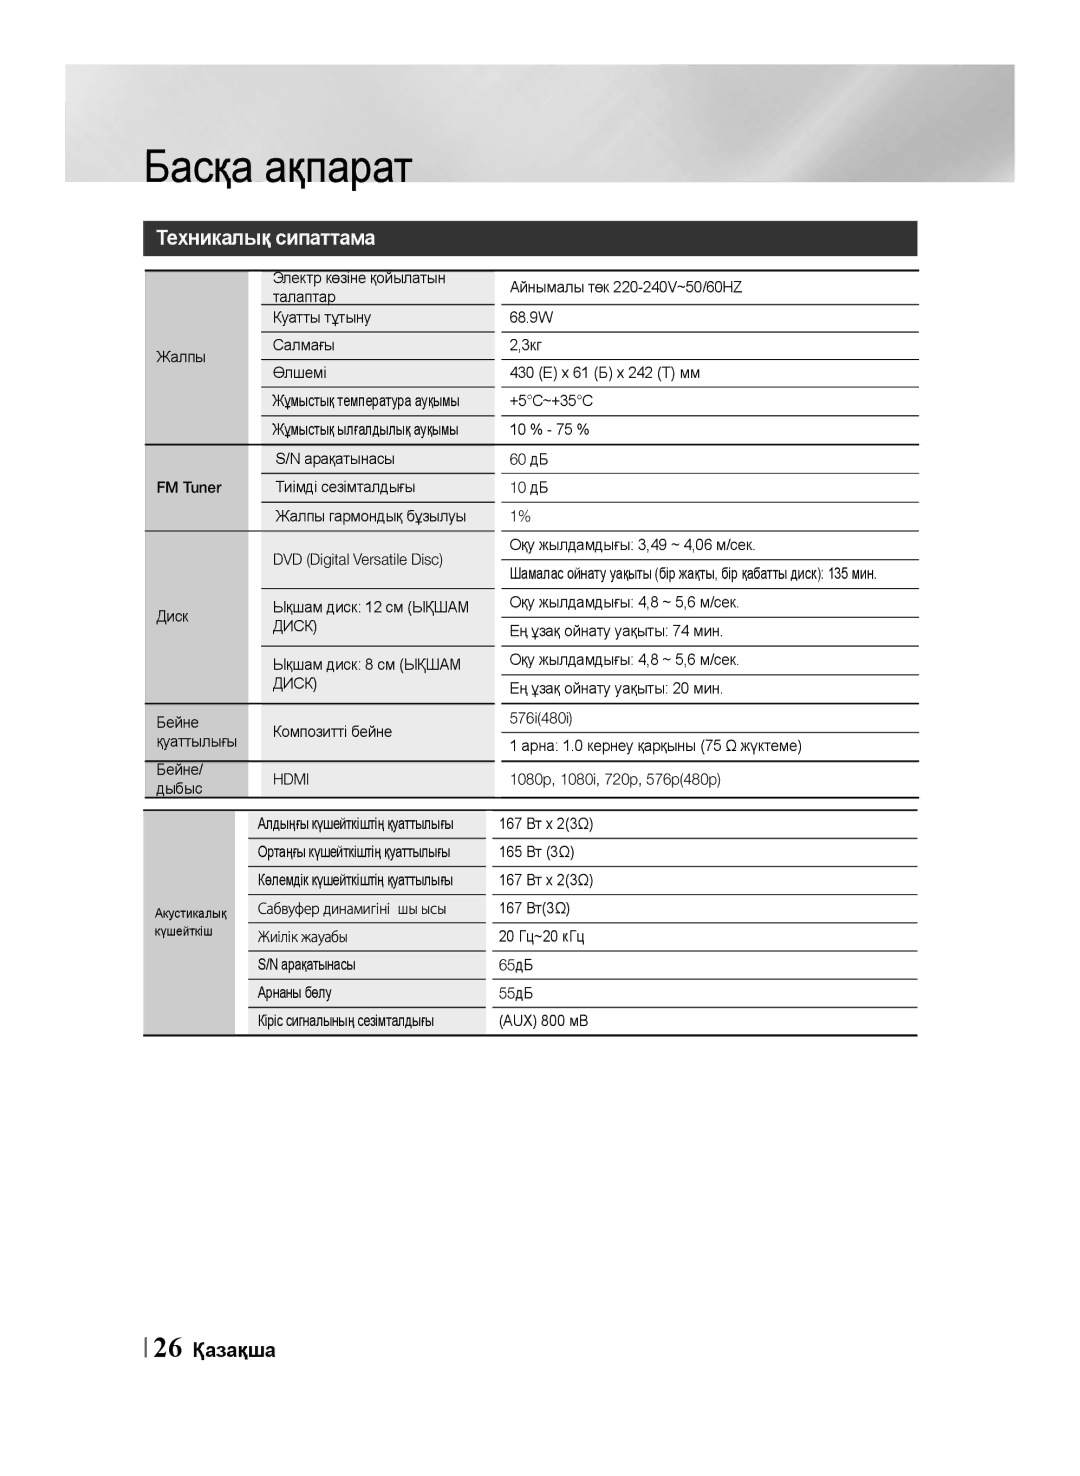 Samsung HT-F453K/RU, HT-F455K/RU manual Техникалық сипаттама, 26 Қазақша, Диск 